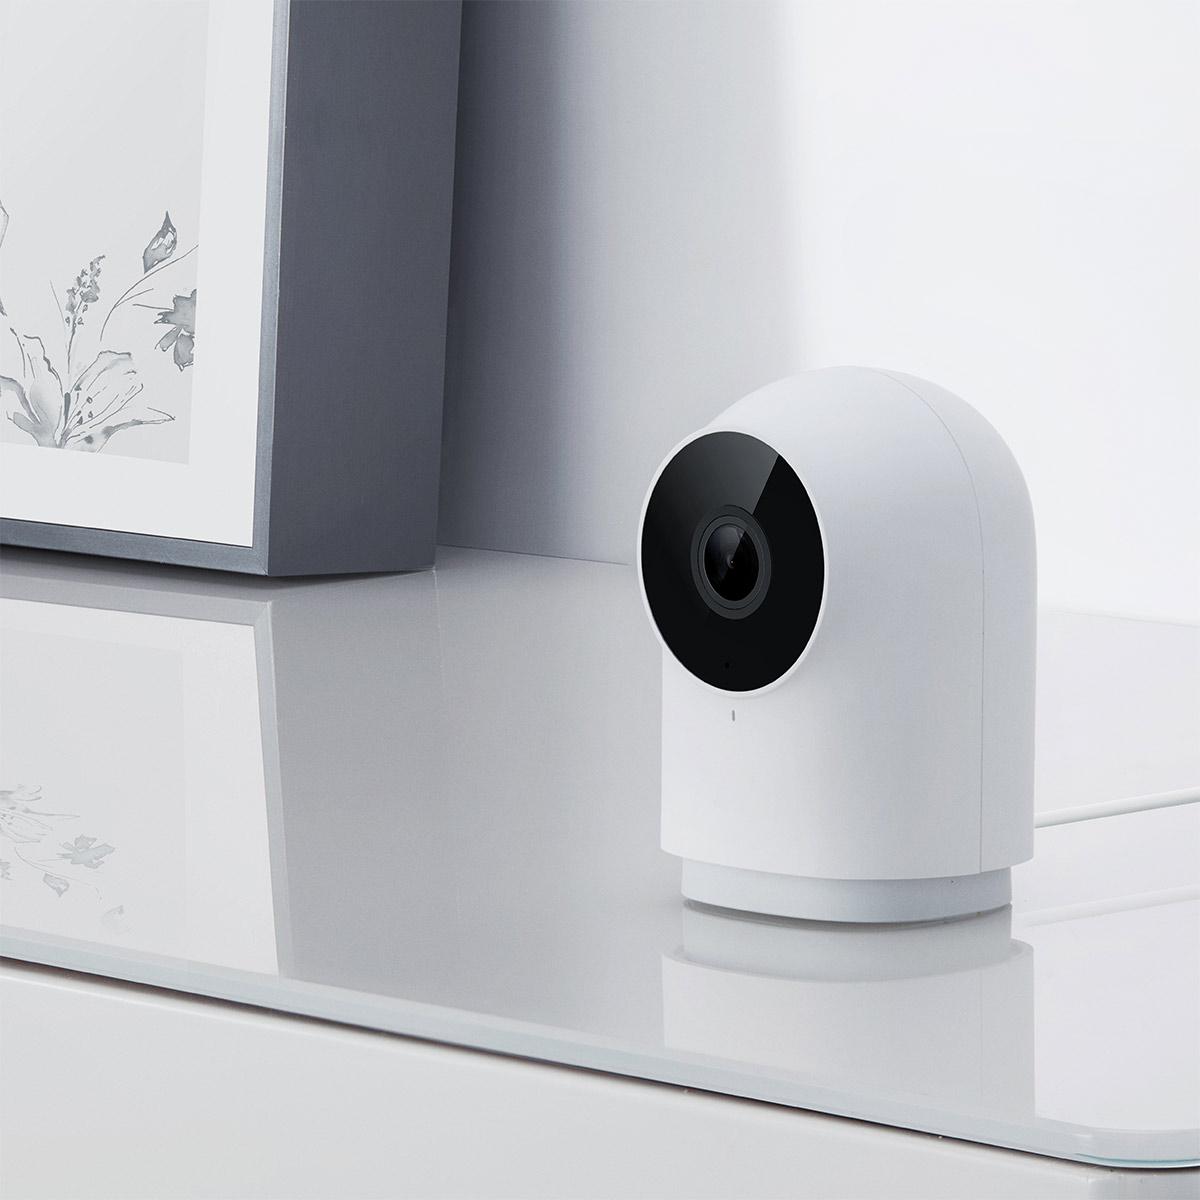 Aqara Camera Hub G3 with Apple HomeKit Secure Video, – System Go